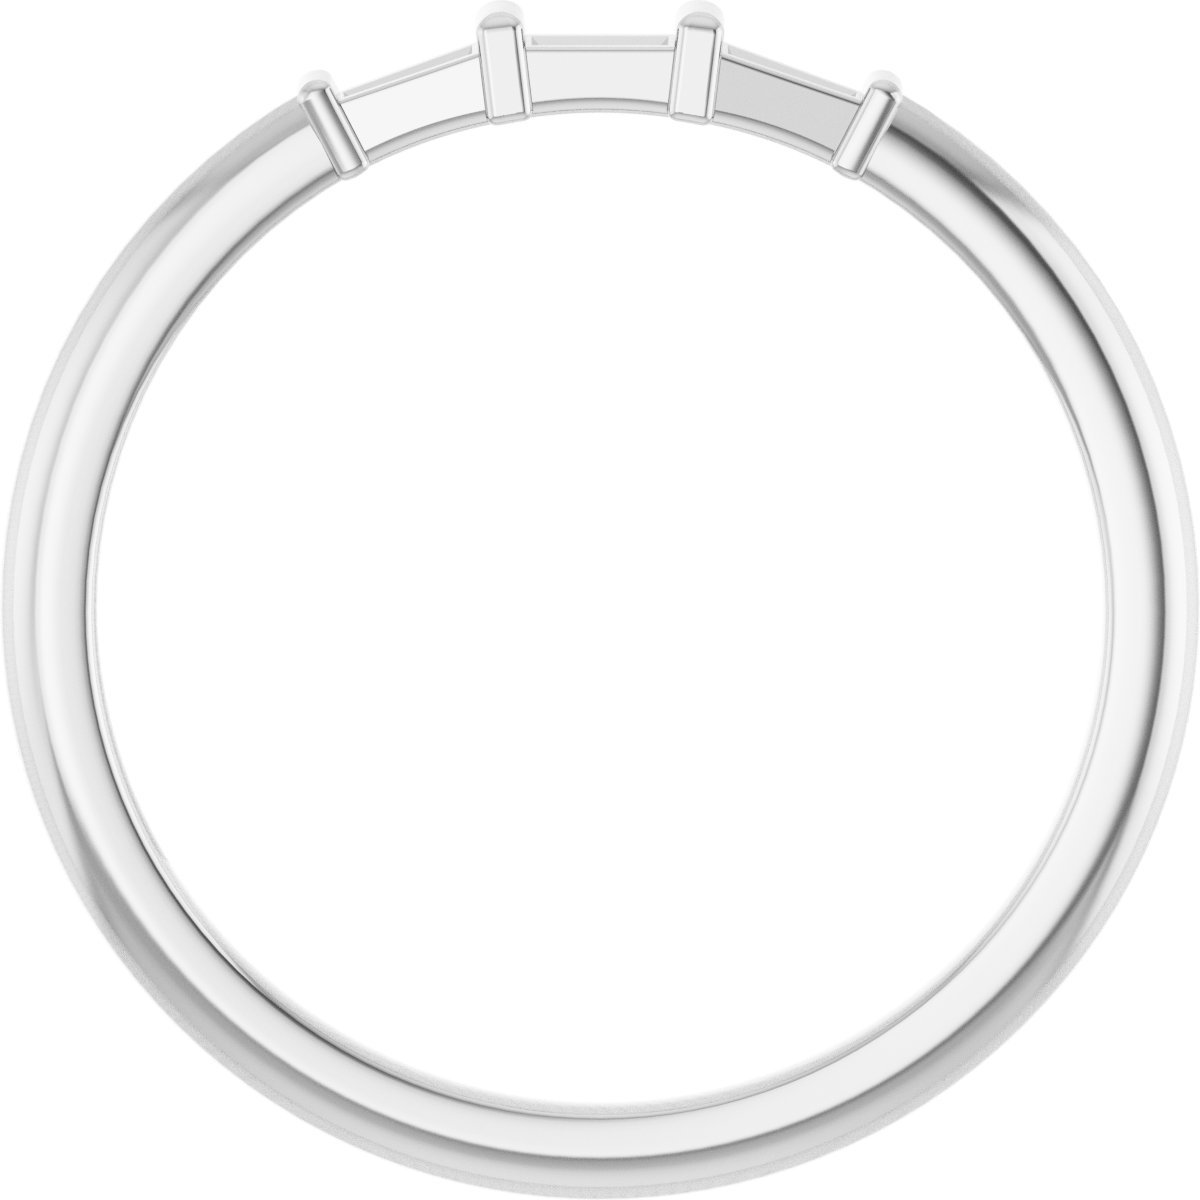 14K White 1/6 CTW Diamond Three-Stone Stackable Ring